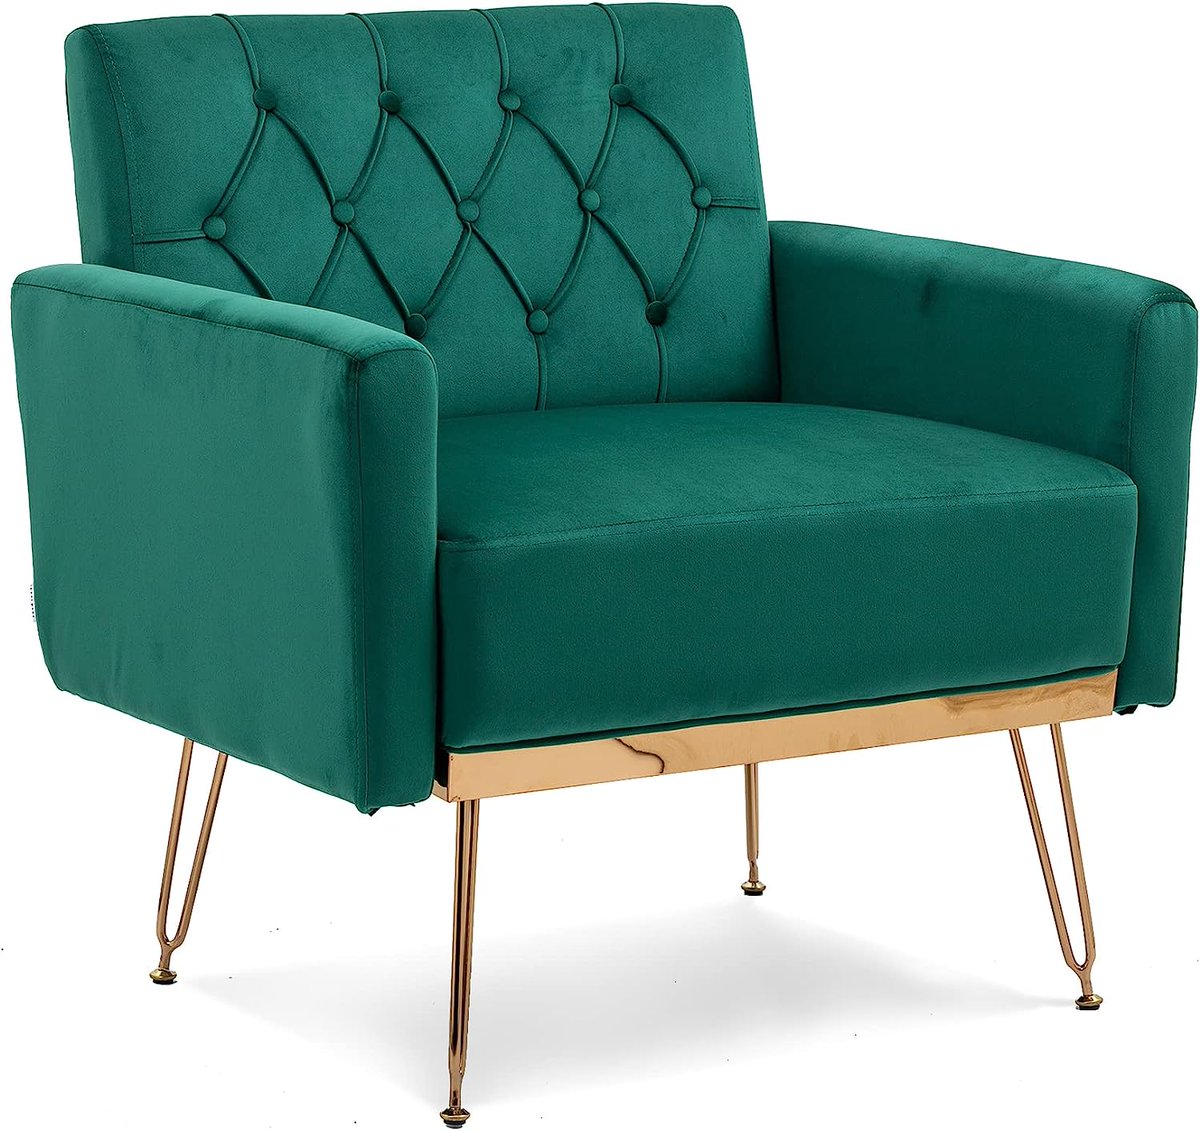 The decorage side chair for 2023
luxbestreviews.com/decorage-side-…

#DecorageSideChair
#ModernLuxury
#SophisticatedSeating
#ContemporaryElegance
#ChicAndStylish
#SleekDesign
#HighEndFurniture
#FashionForward